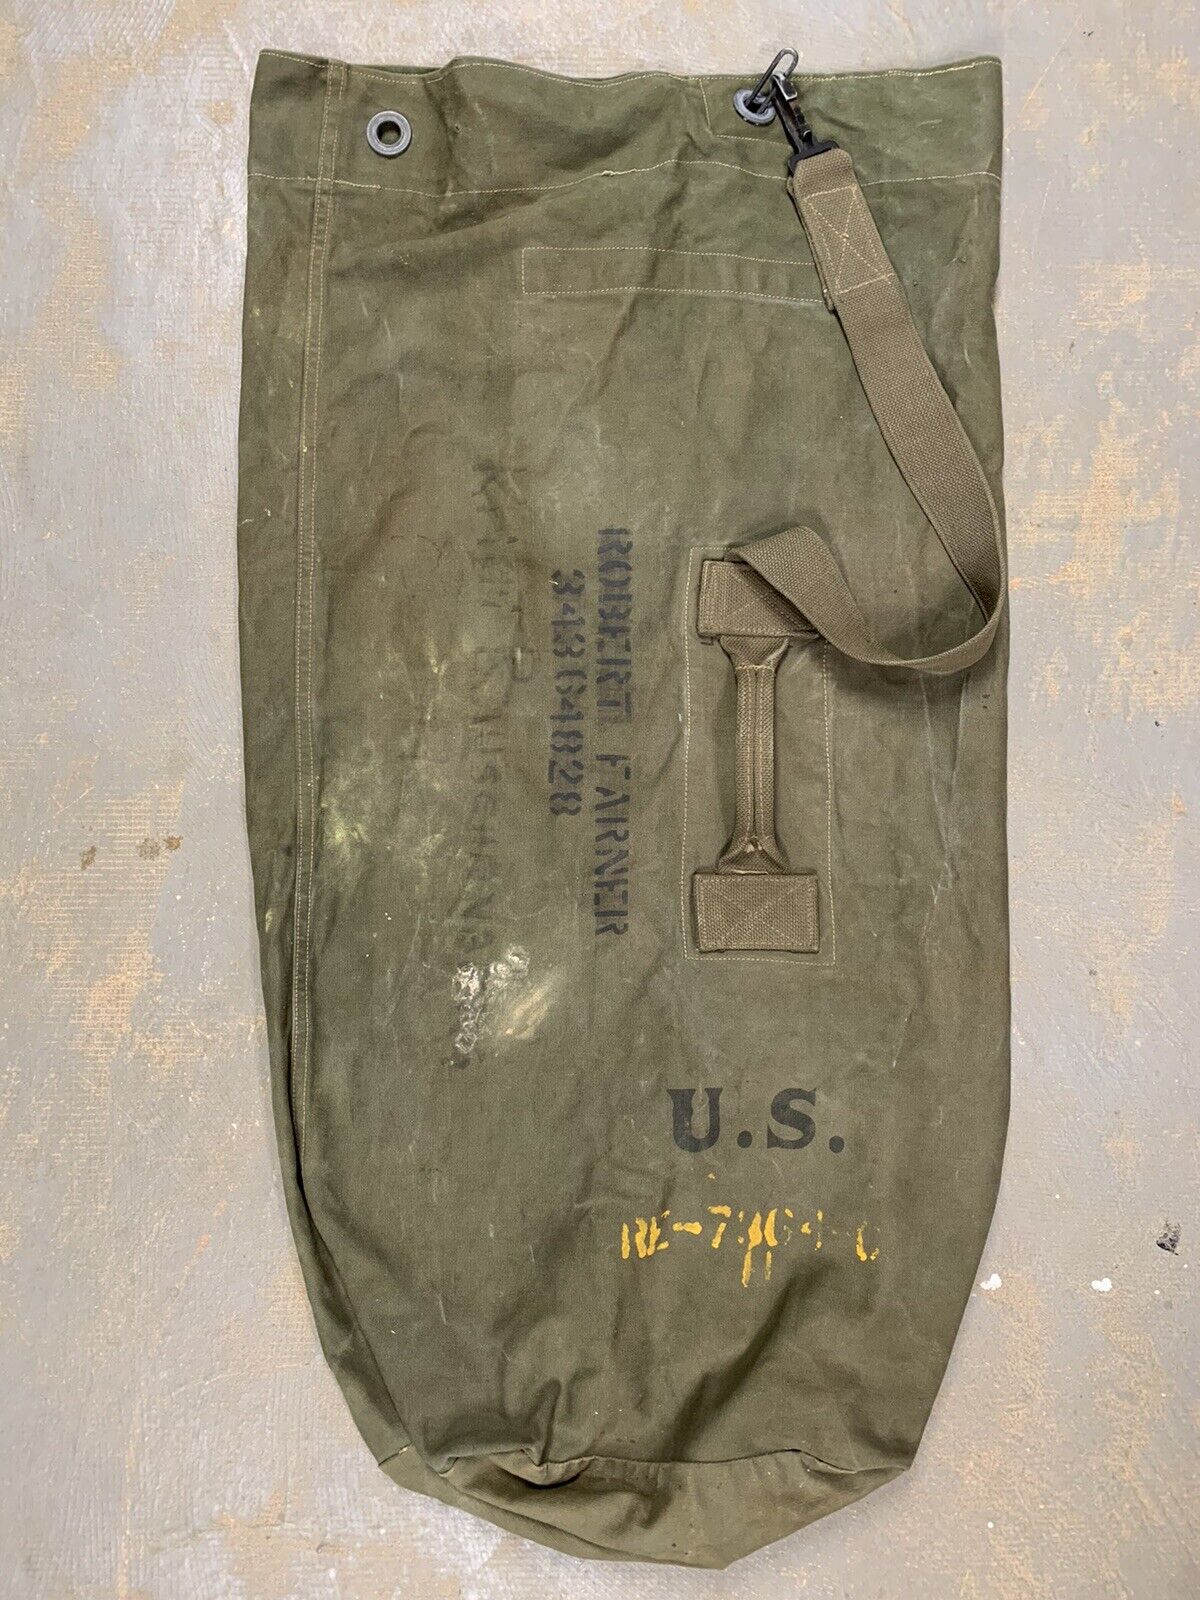 1944 Named Original WWII U.S. ARMY OD BARRACK DUFFLE BAG